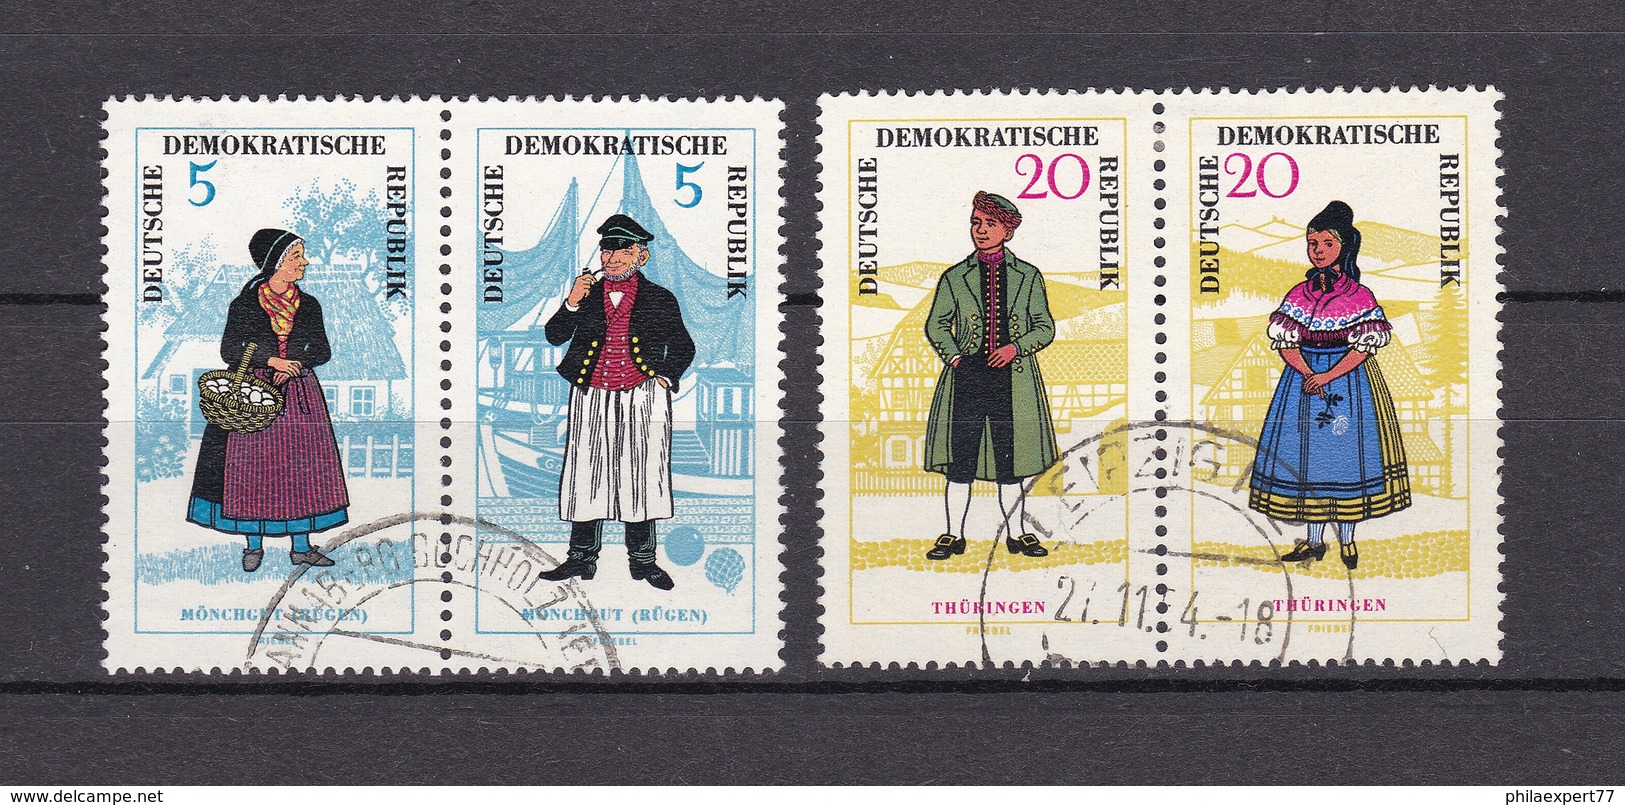 DDR - 1964 - Michel Nr. W Zd 144 + W Zd 149 - 48 Euro - Zusammendrucke